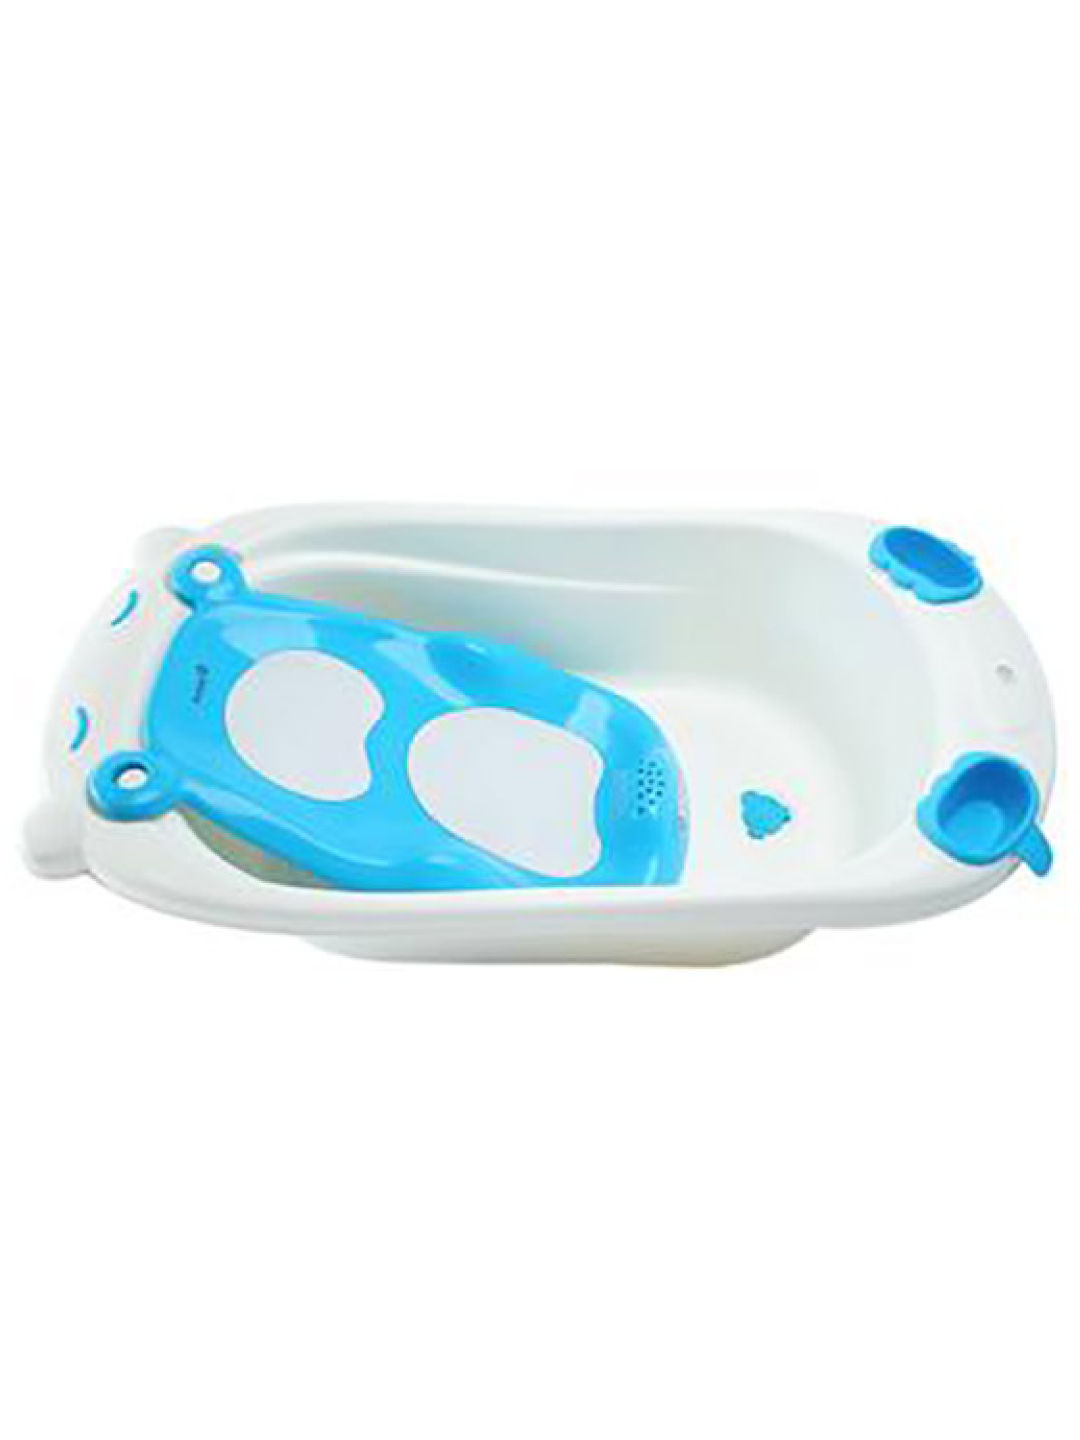 Safety 1st Baby Bear Bathtub (Blue- Image 1)